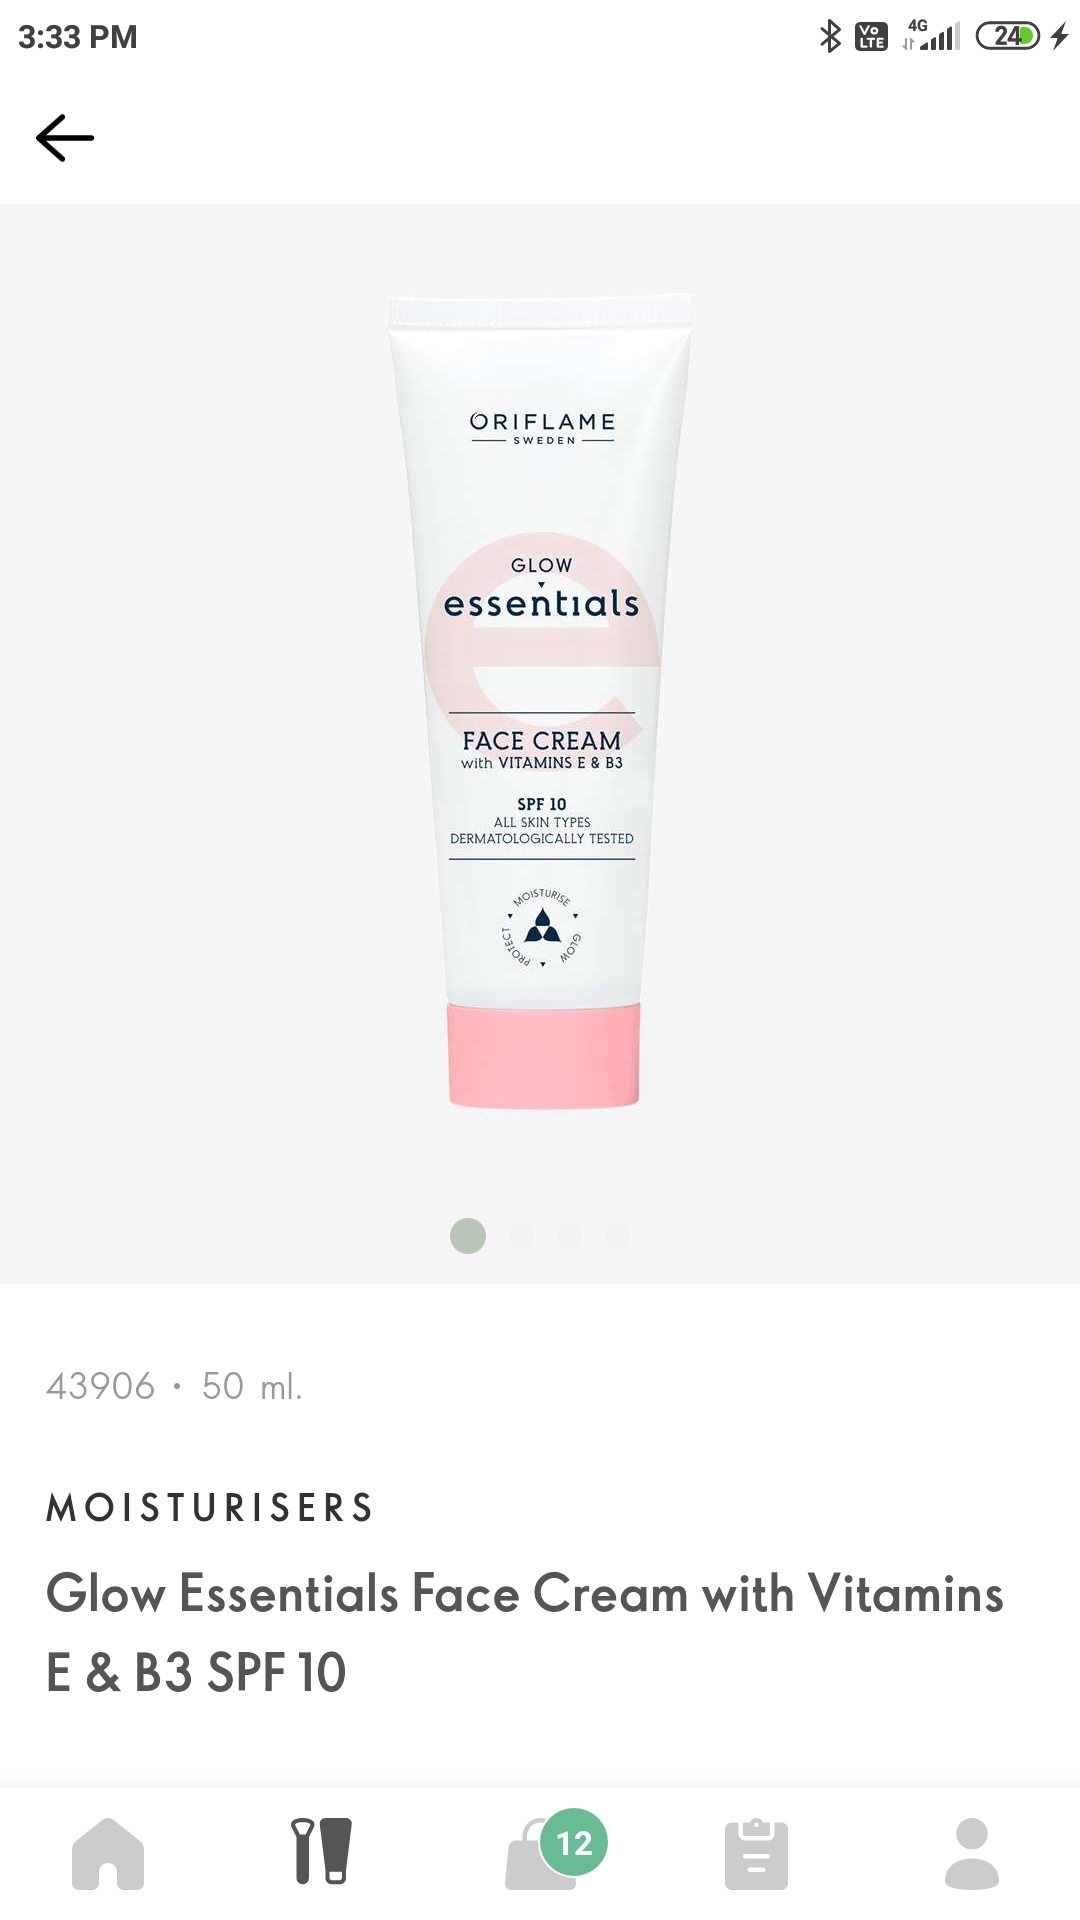 Glow Essentials Face Cream with Vitamins E & B3 SPF 10 (43906) day